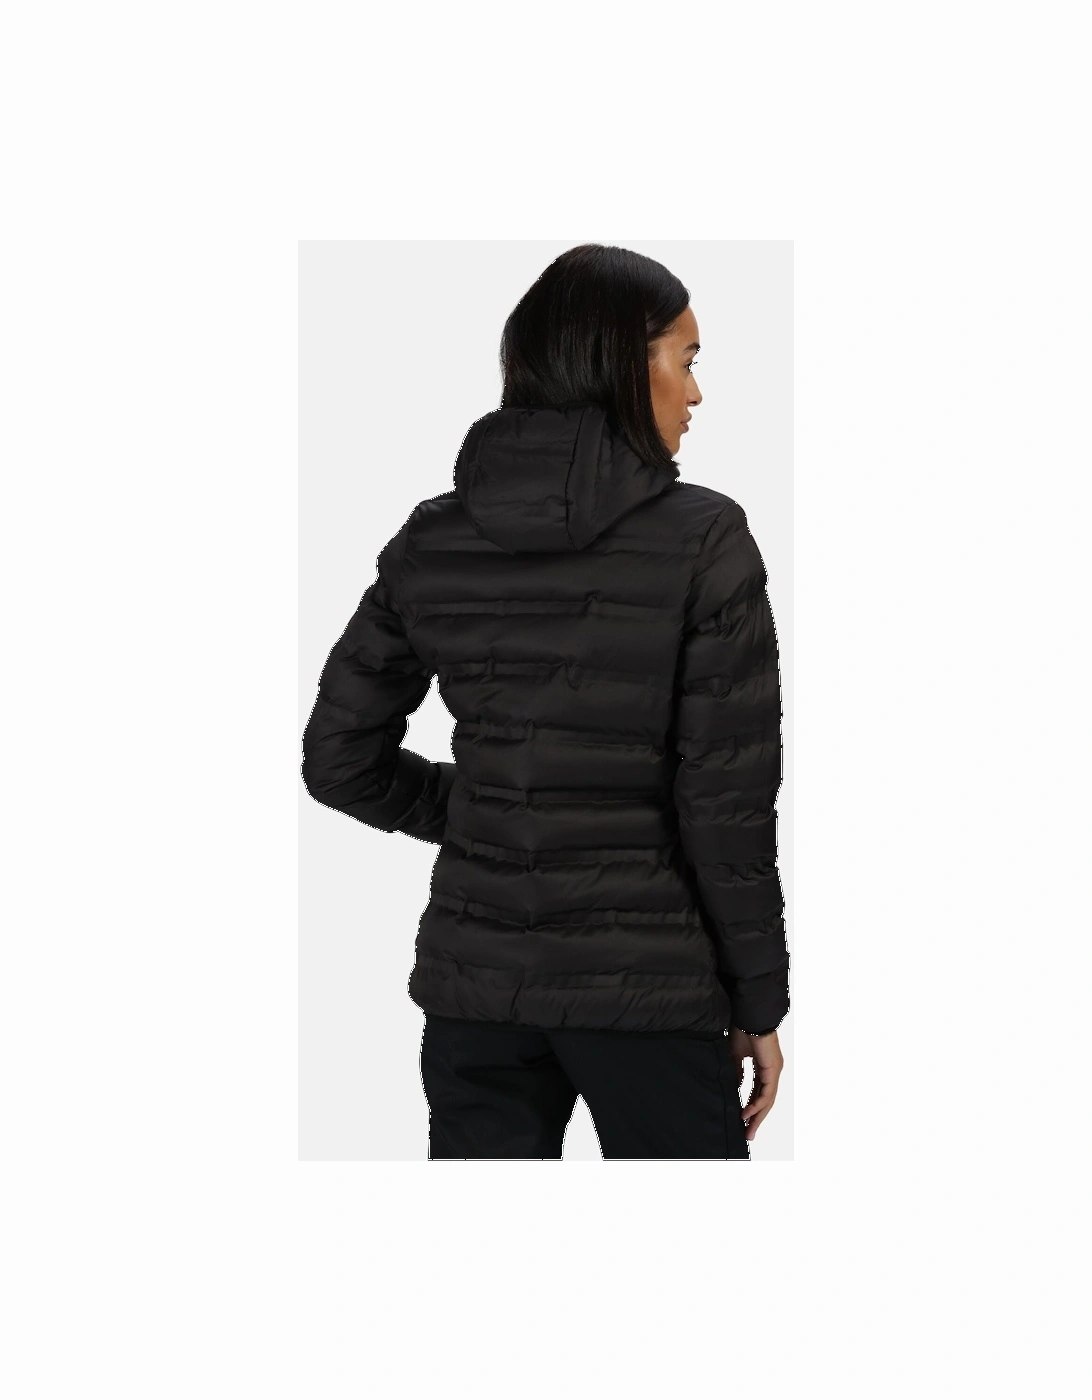 Womens/Ladies X-Pro Icefall III Insulated Jacket